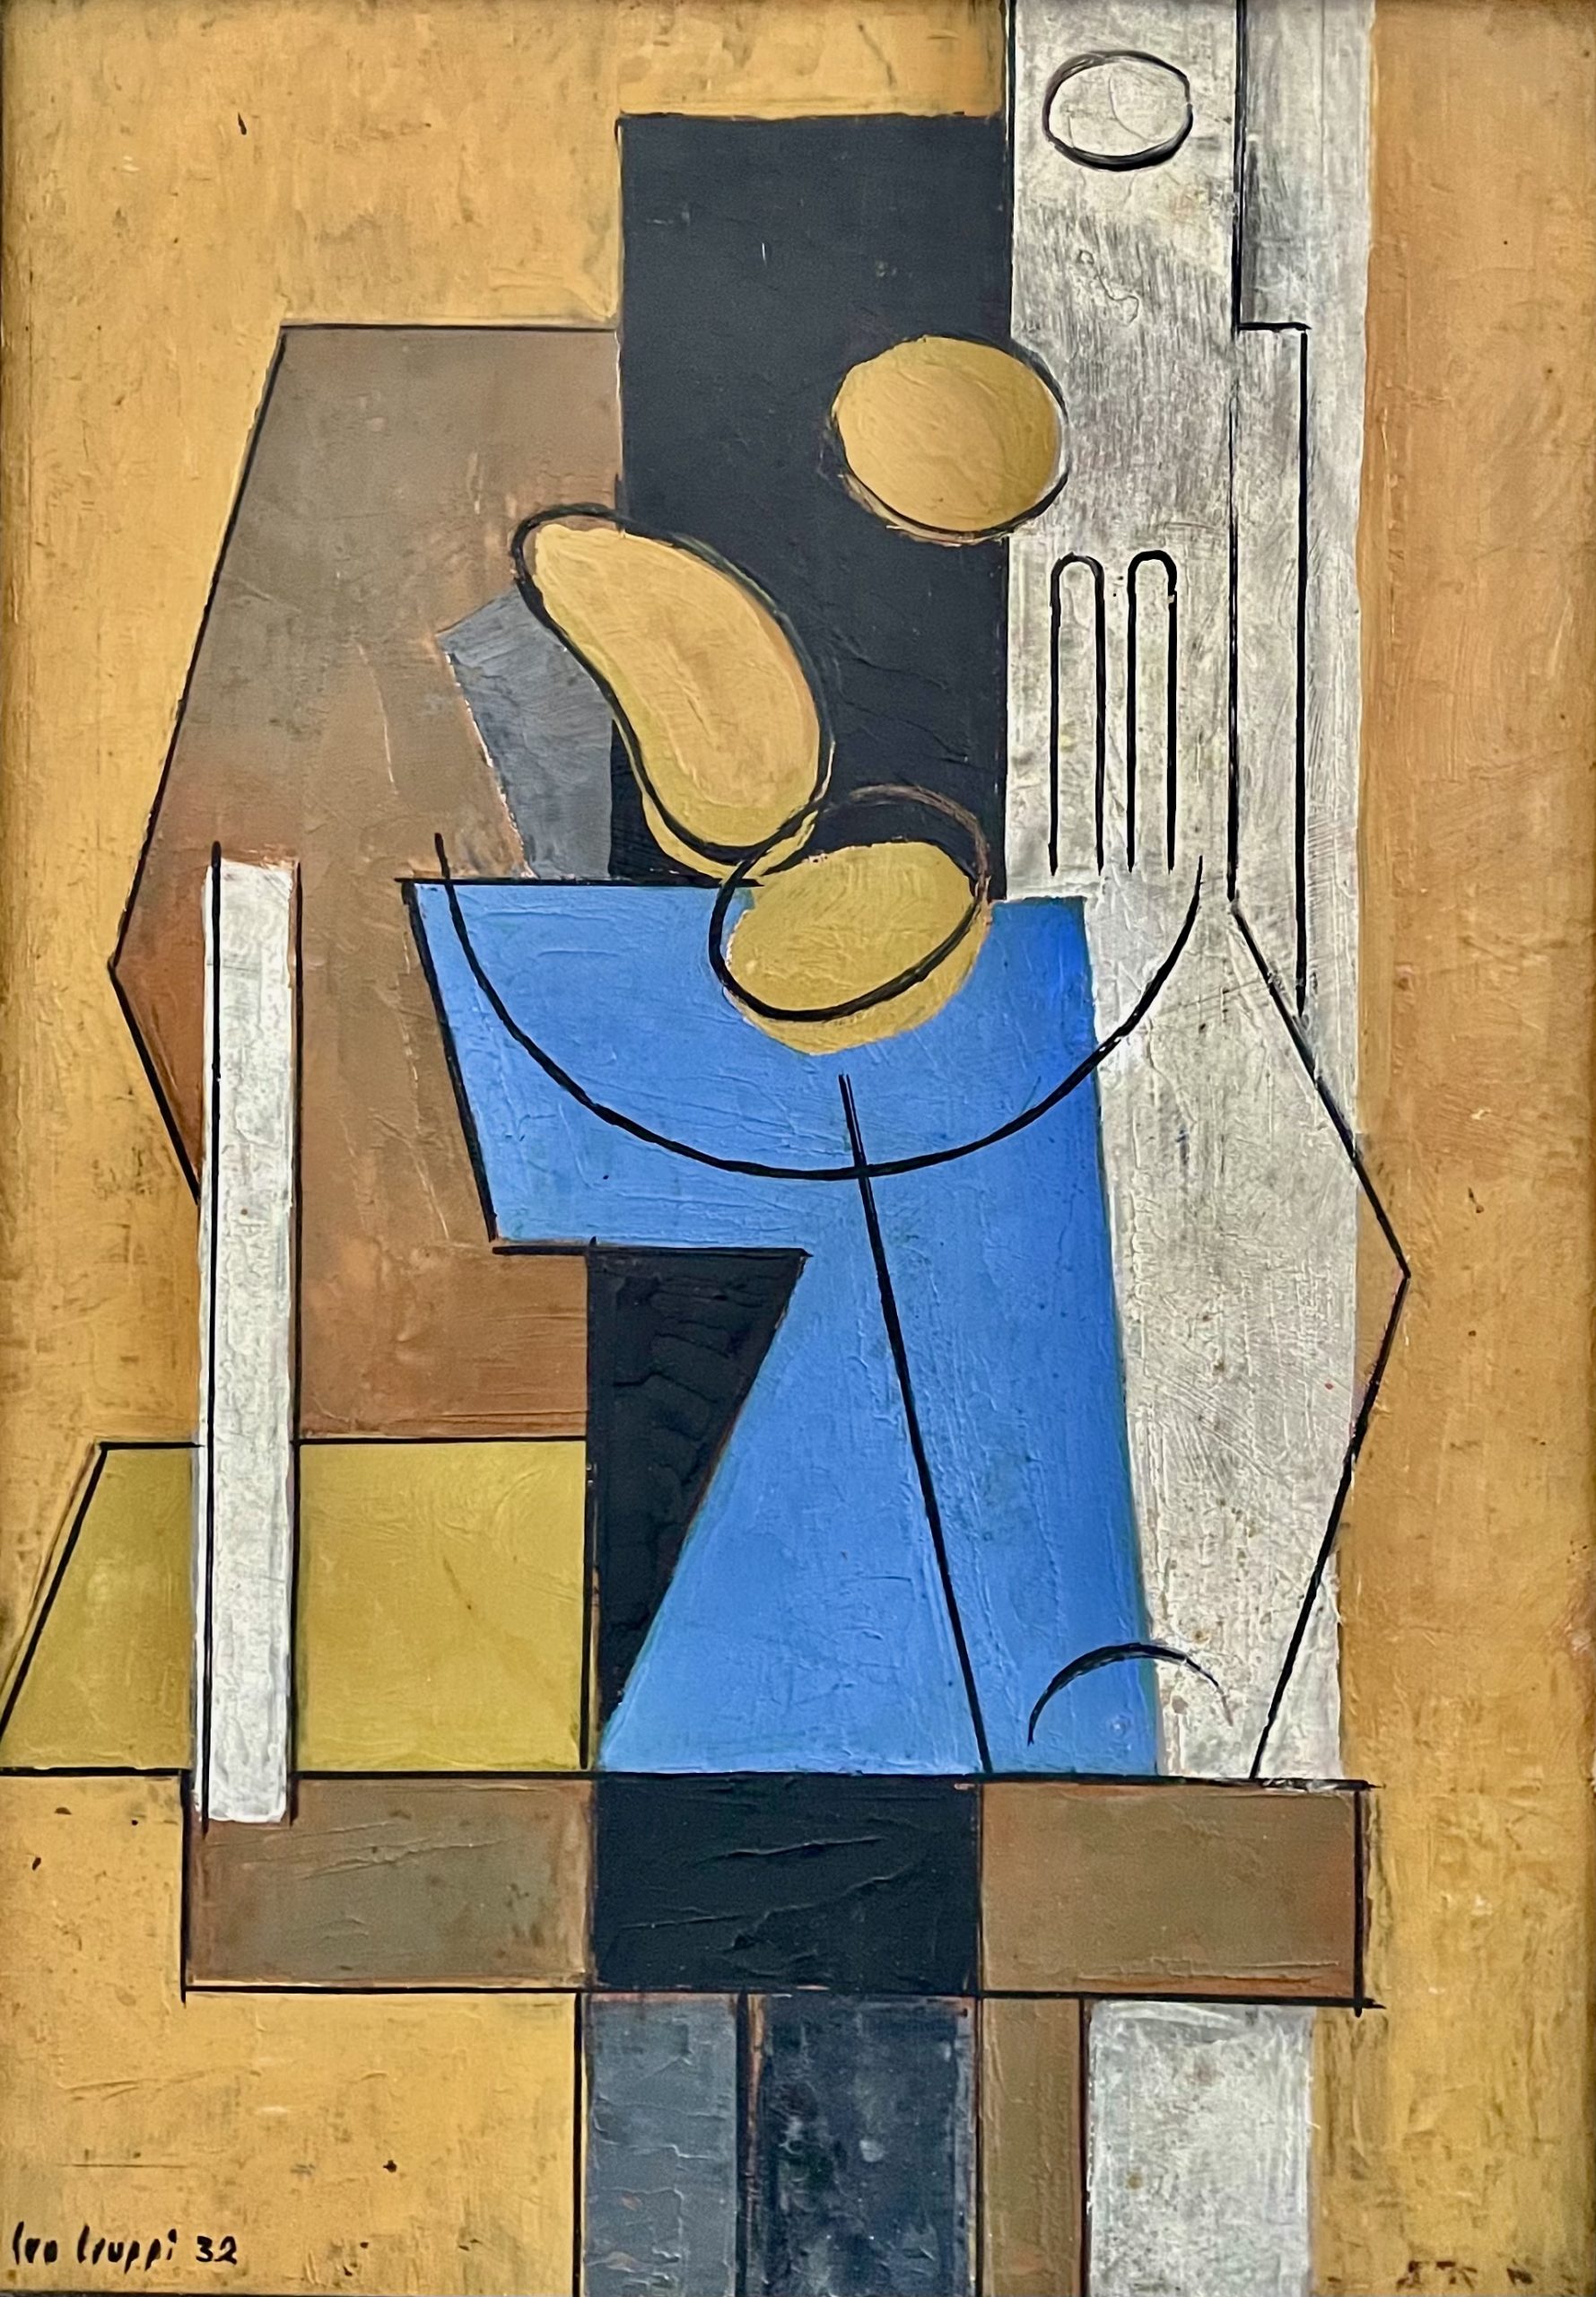 Leo Leupi (1893 - 1972), oil on wood from 1931, 26 x 37 cm